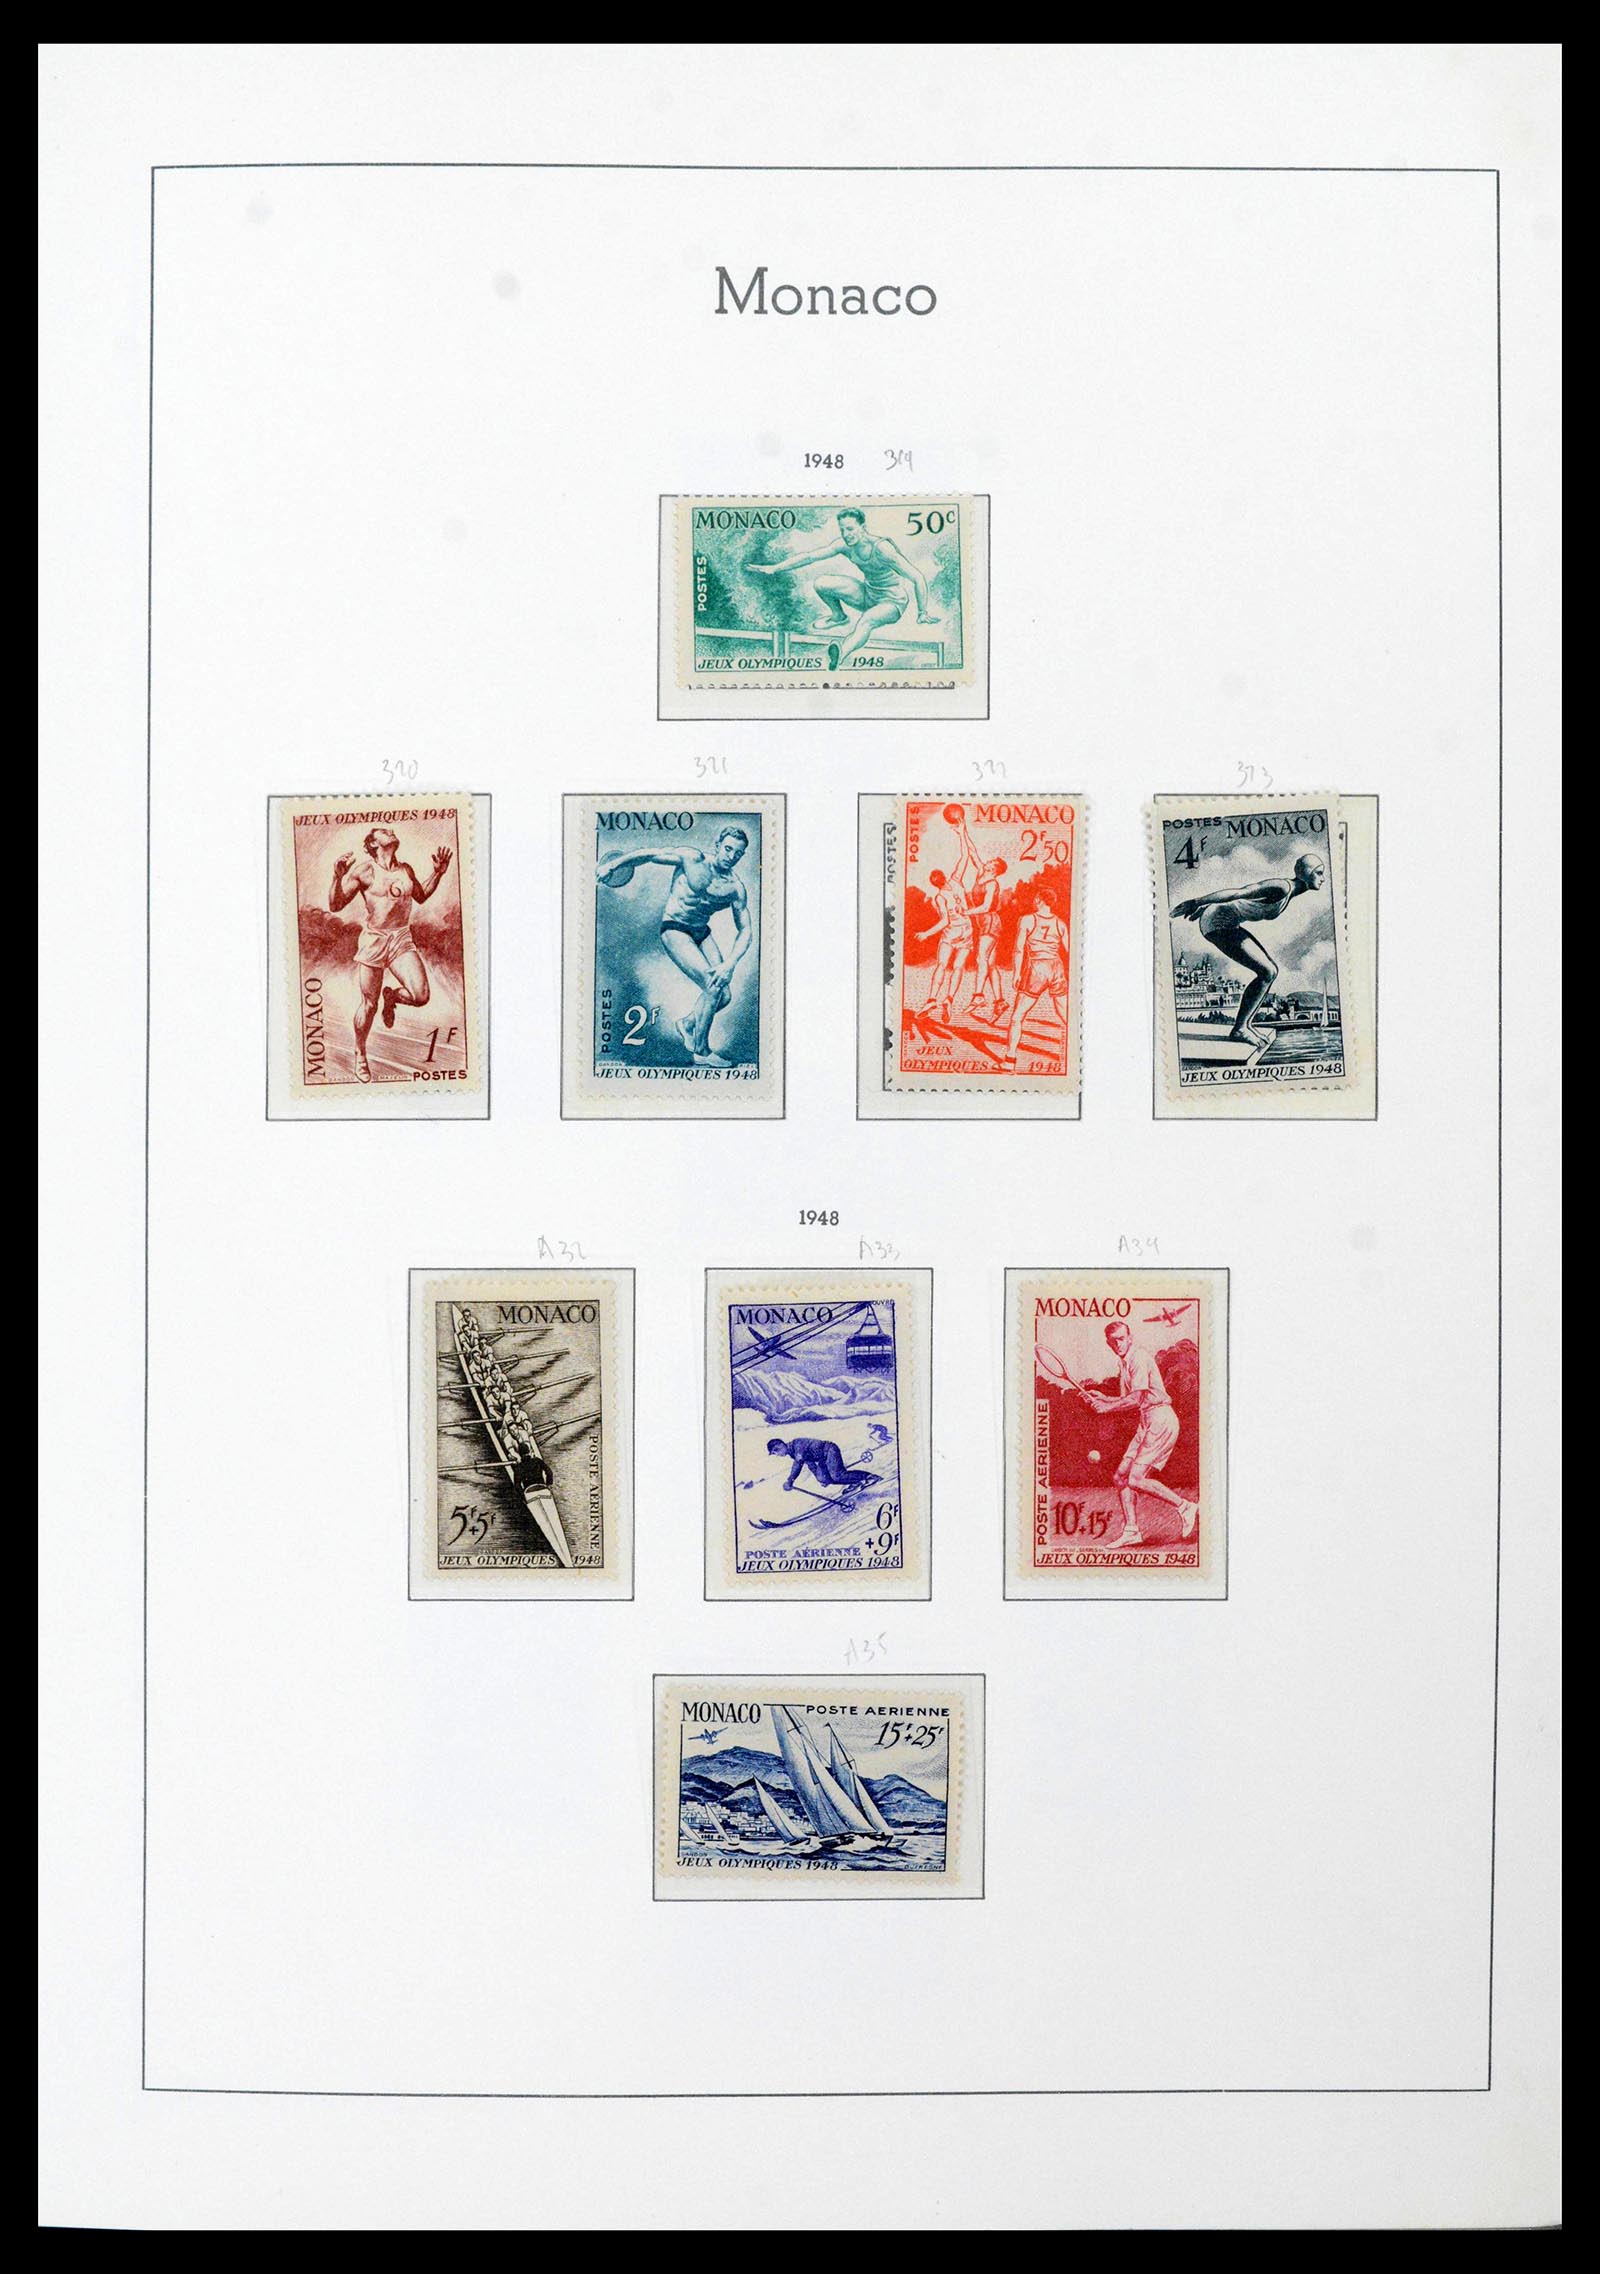 39250 0034 - Stamp collection 39250 Monaco 1885-1995.